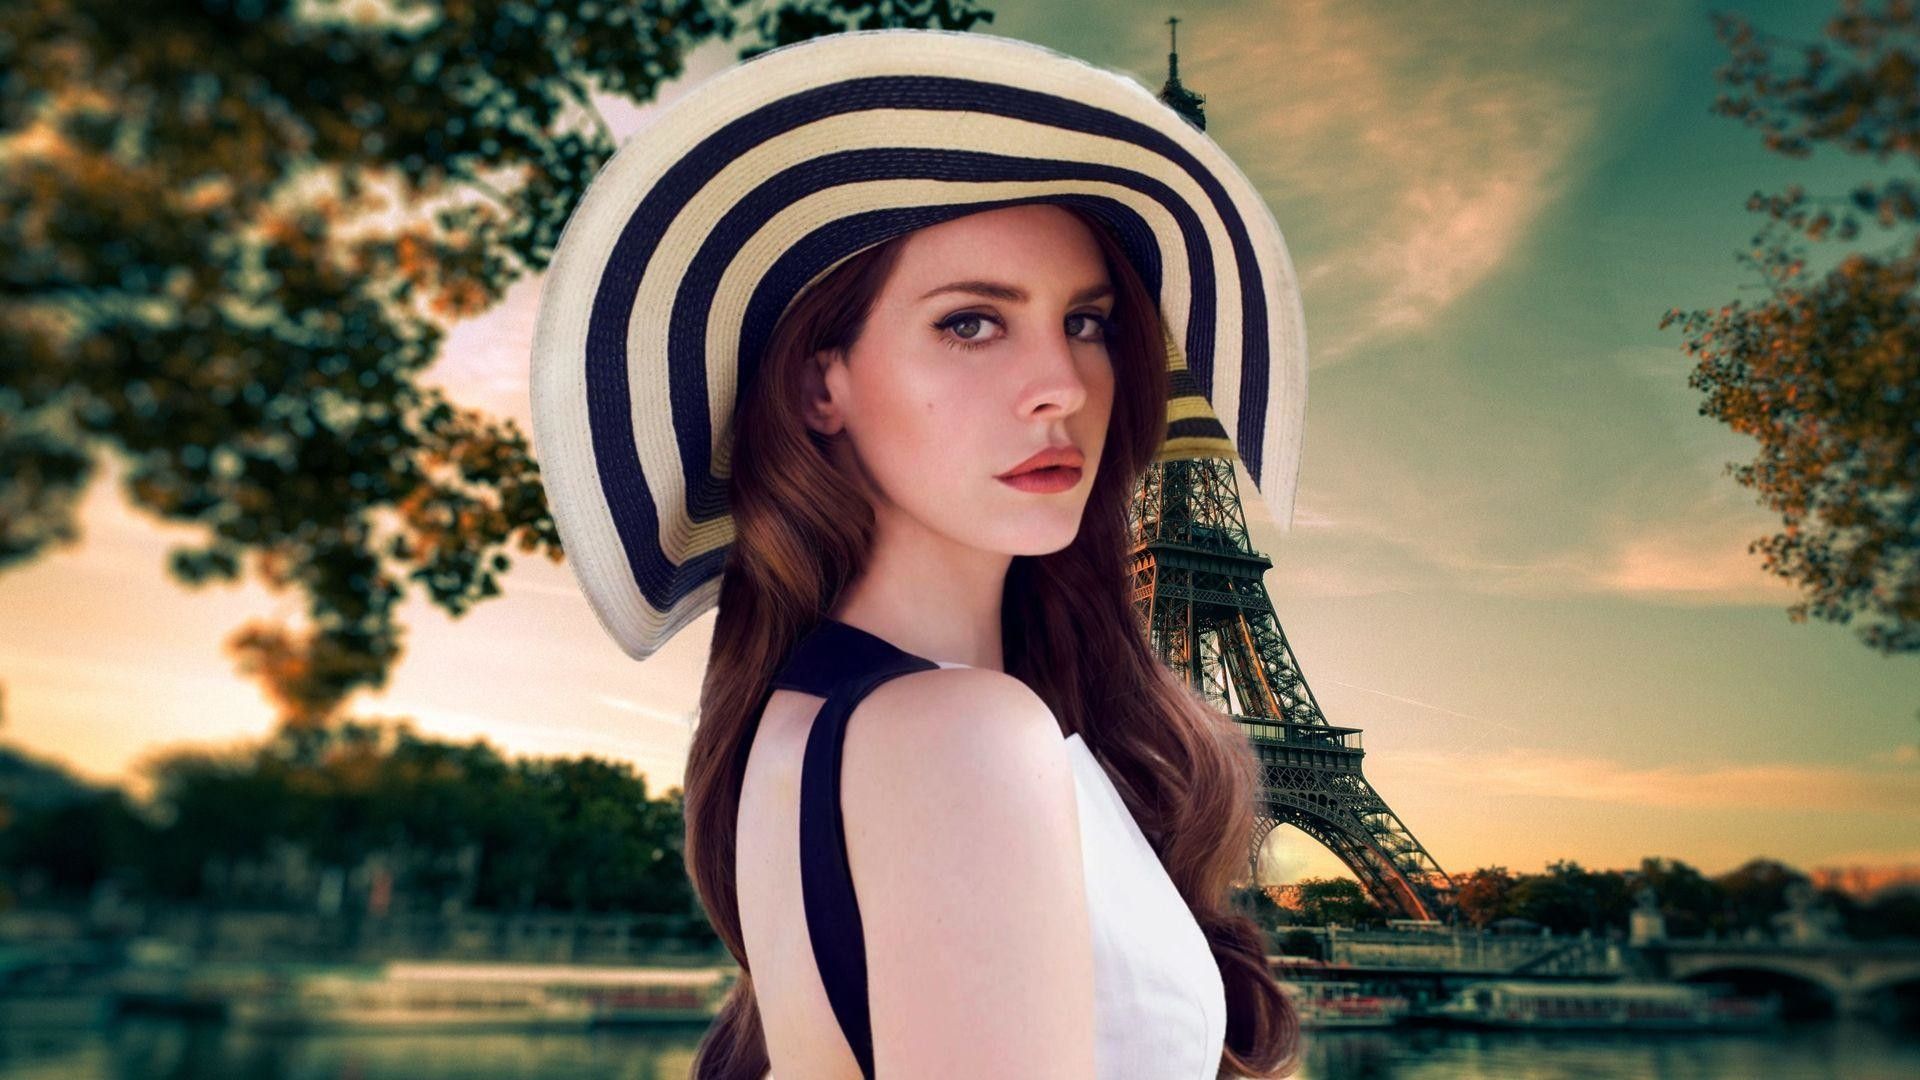 Wallpaper girl with a hat in Paris - Lana Del Rey